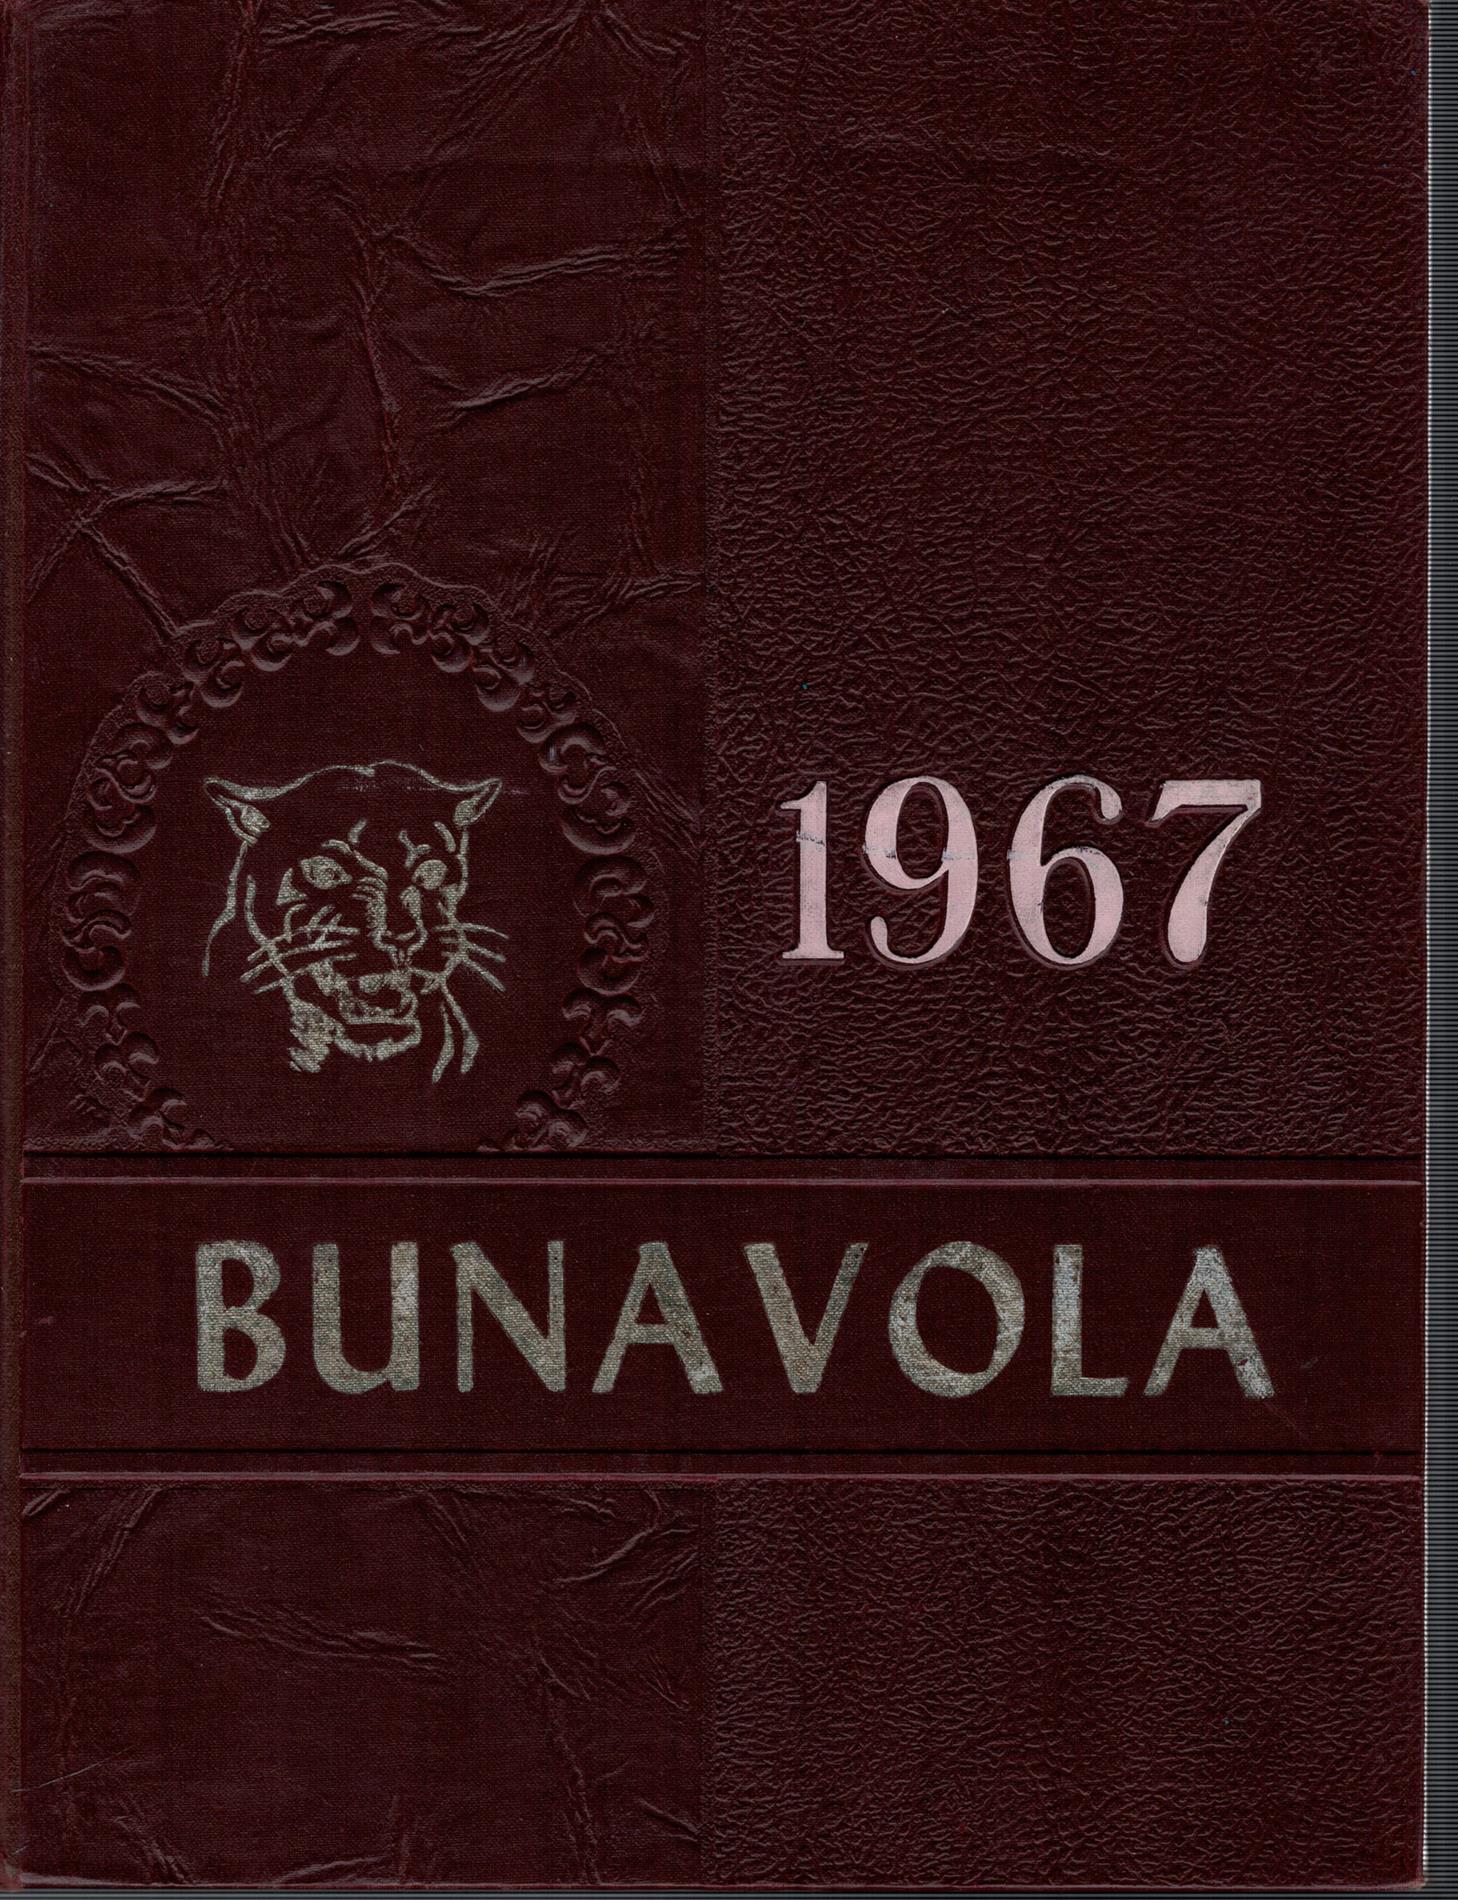 1967 Bunavola